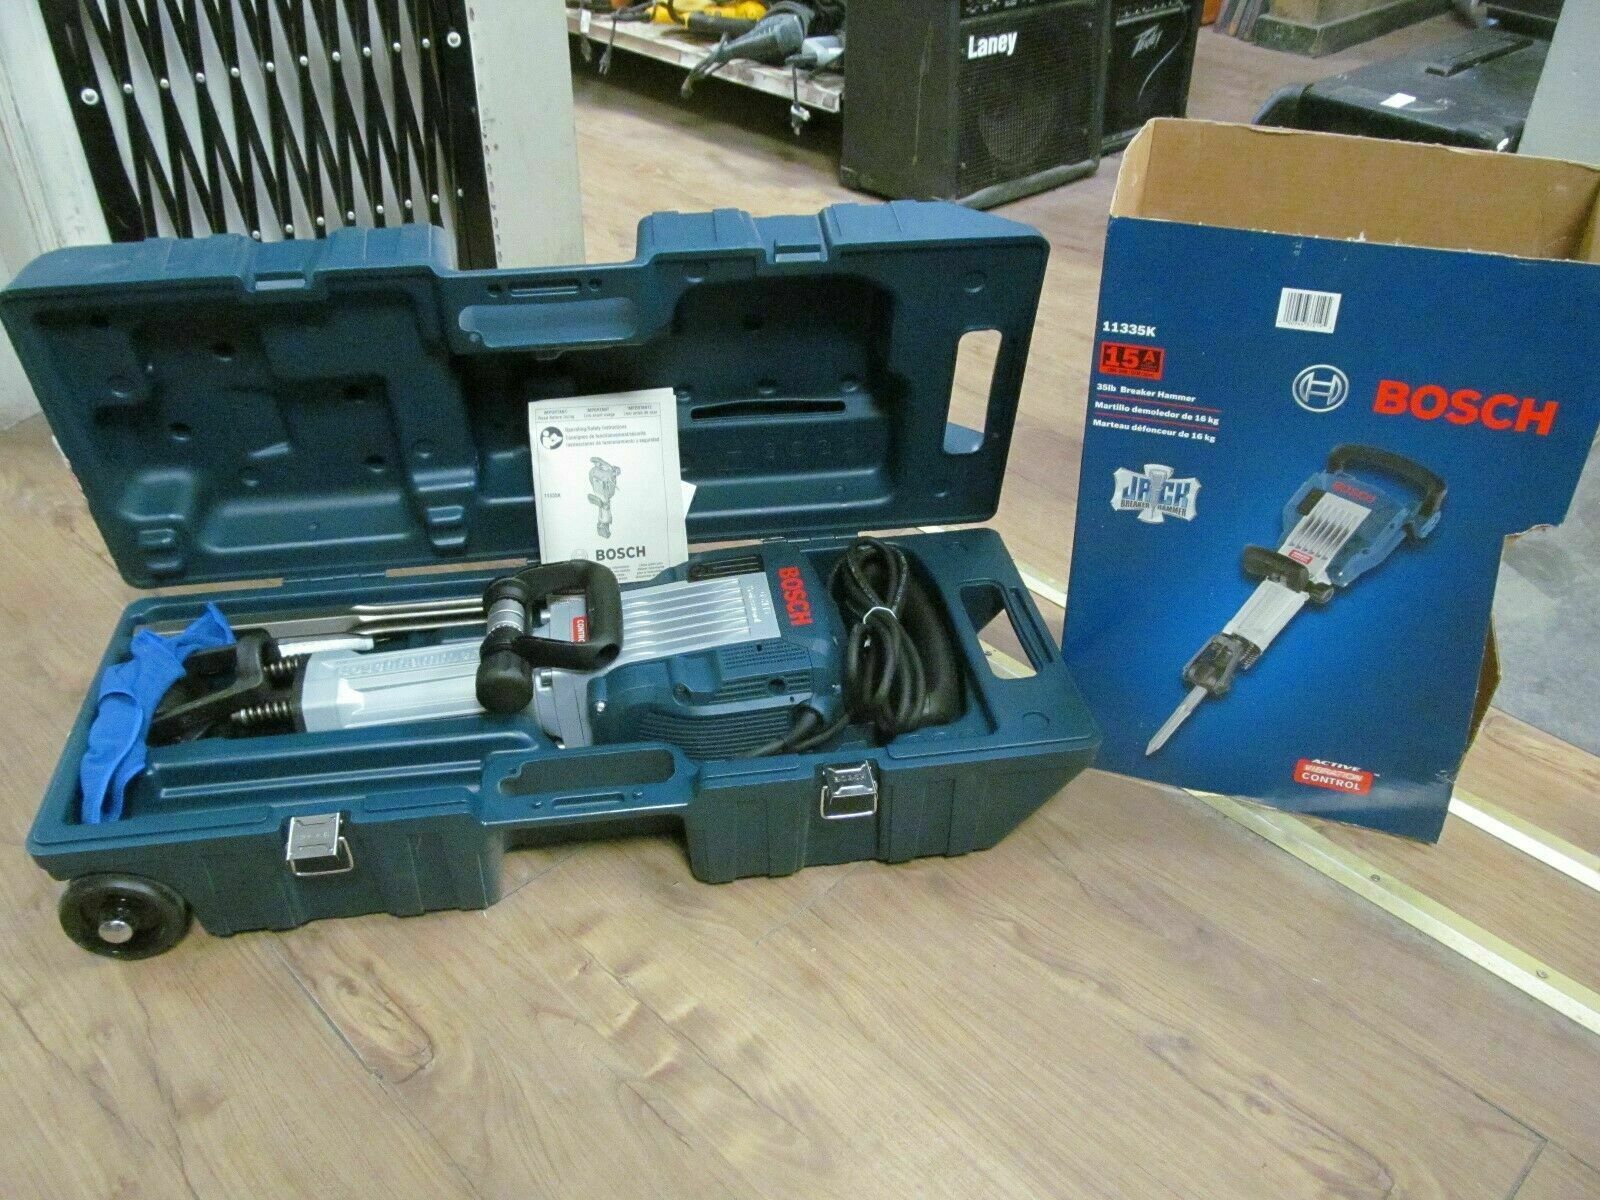 Bosch Demolition Hammer Kit Impact 34 Ft/lb Model 11335k With Hard Rolling Case